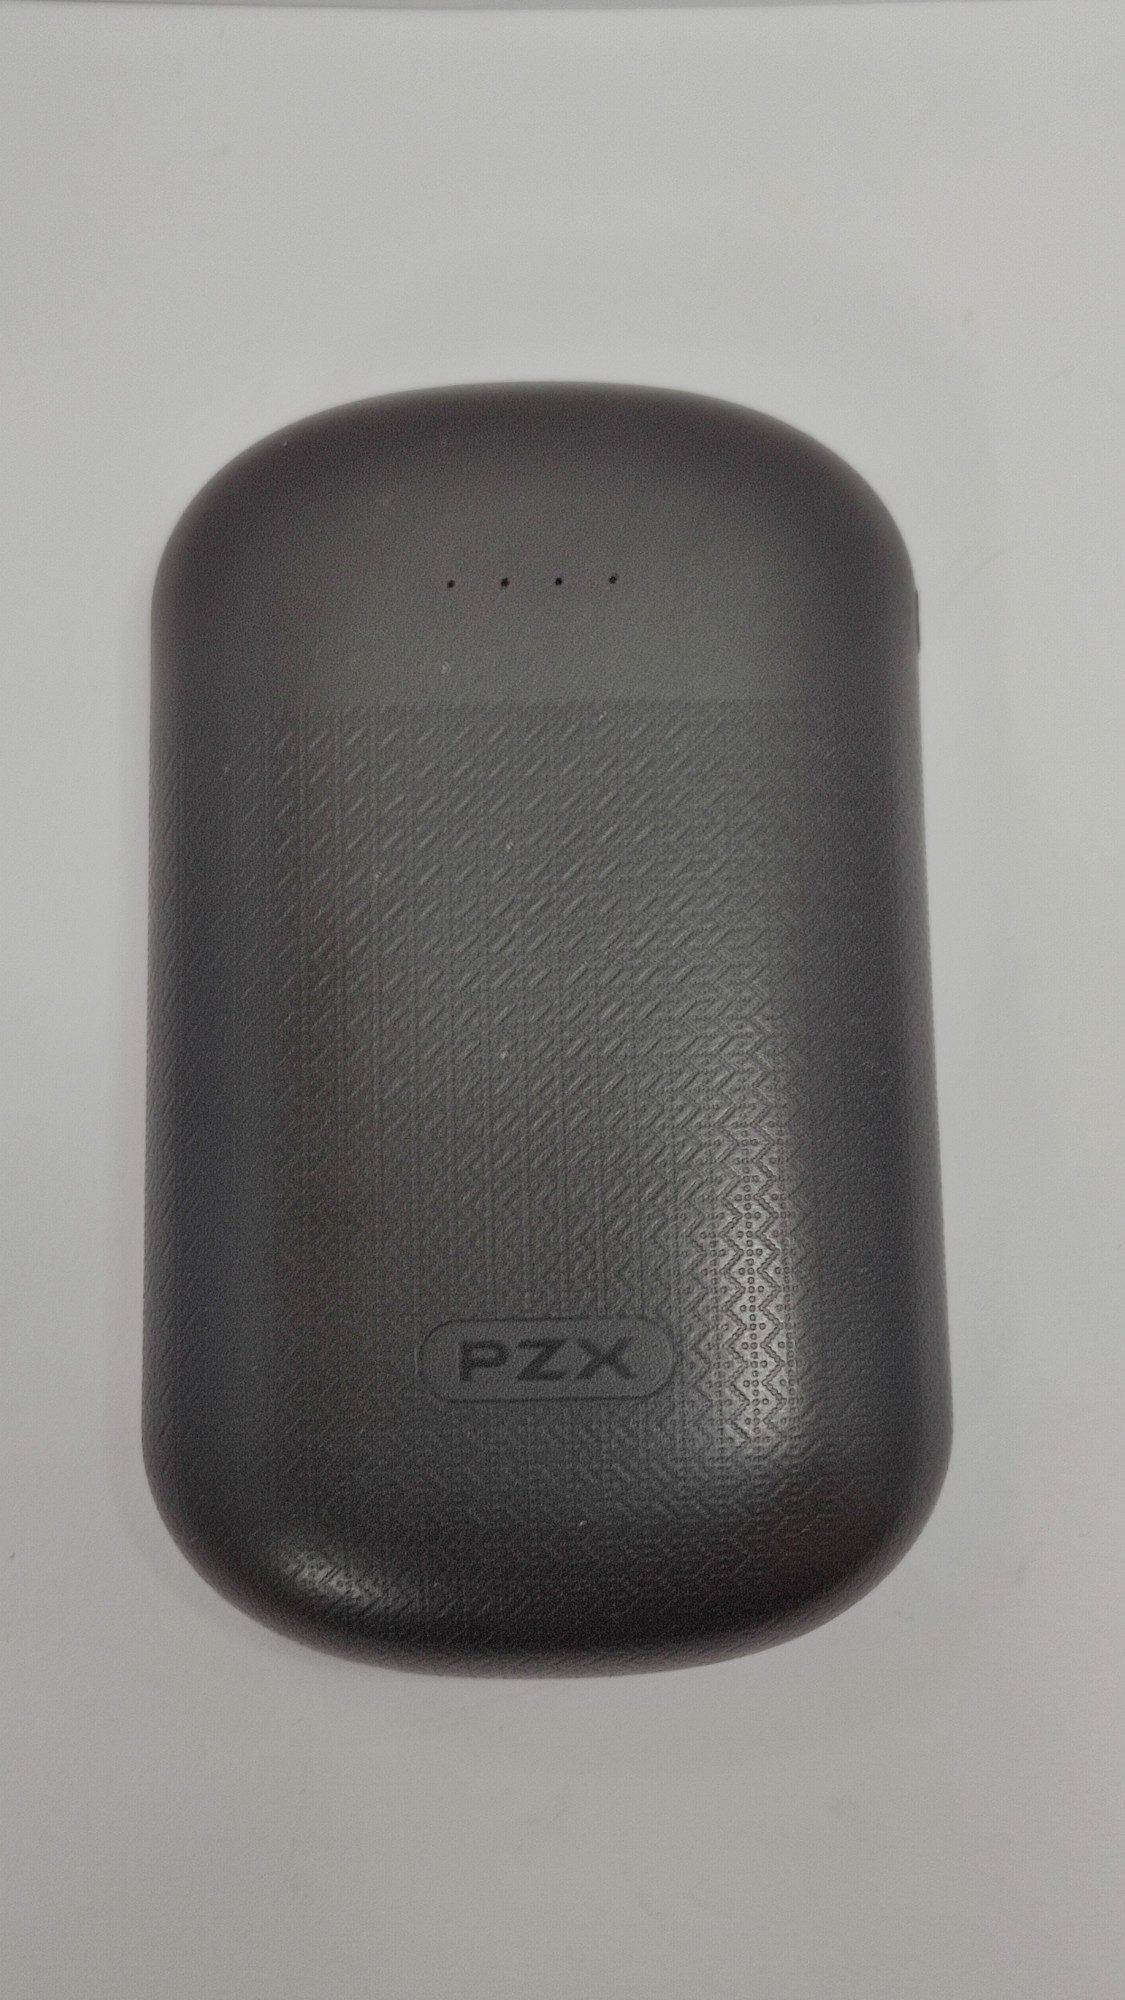 Powerbank PZX 10400 mAh 0